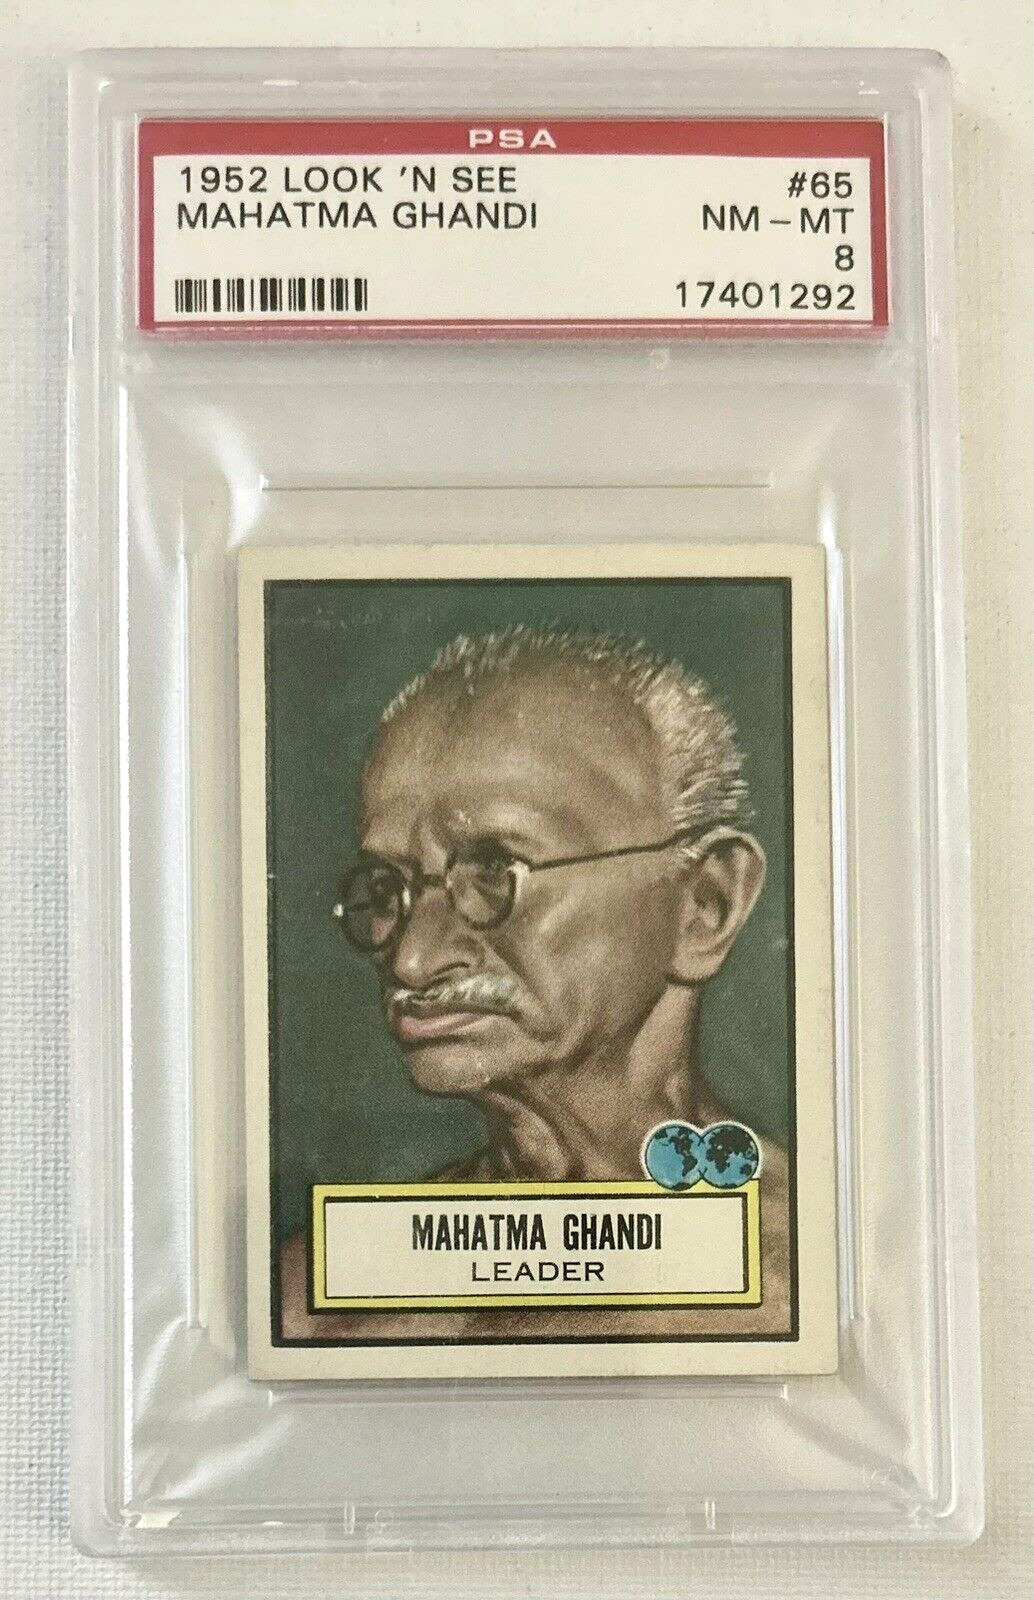 MAHATMA GHANDI 1952 TOPPS LOOK 'N SEE CARD #65 PSA 8 NEAR MINT/MINT LEADER INDIA